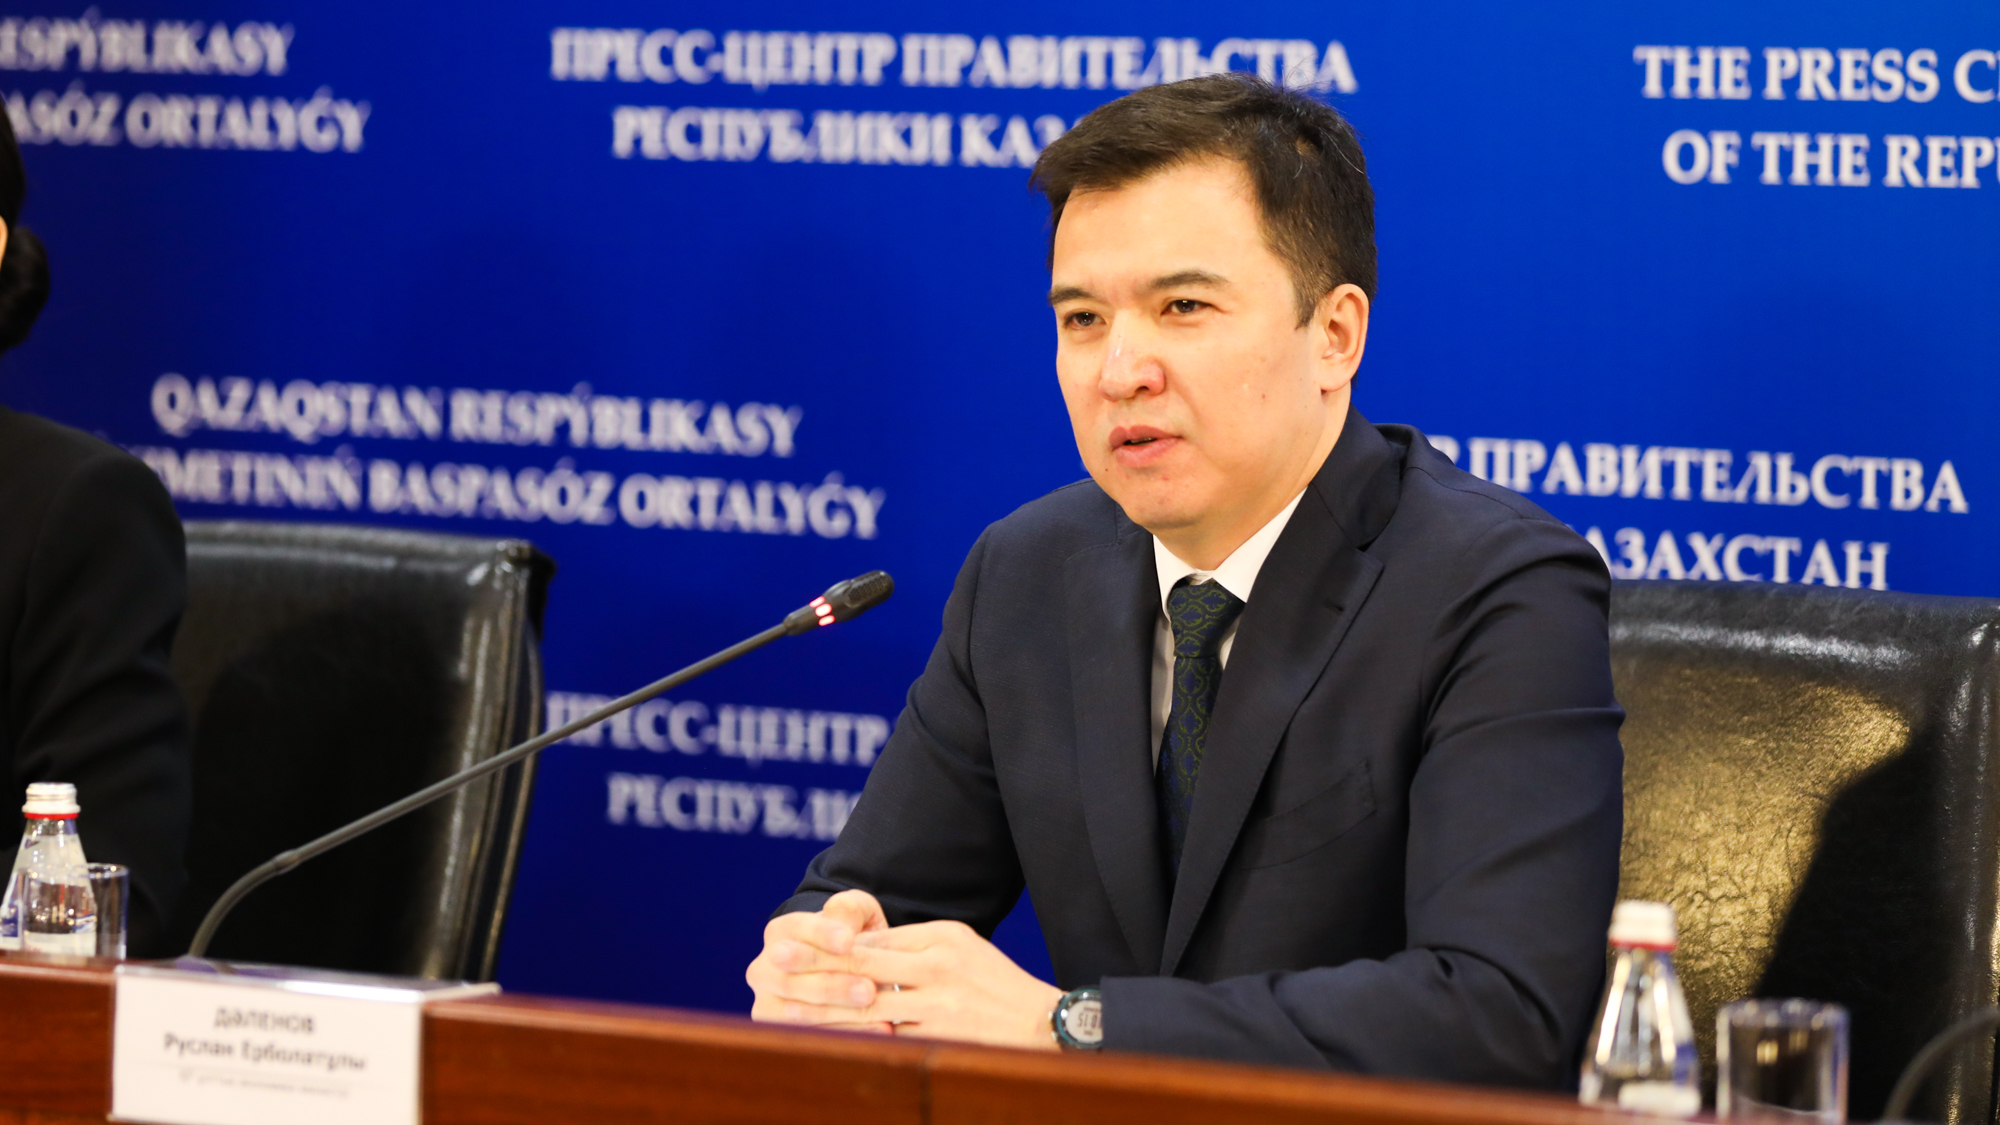 Measures taken to help maintain macroeconomic stability in Kazakhstan — Ruslan Dalenov